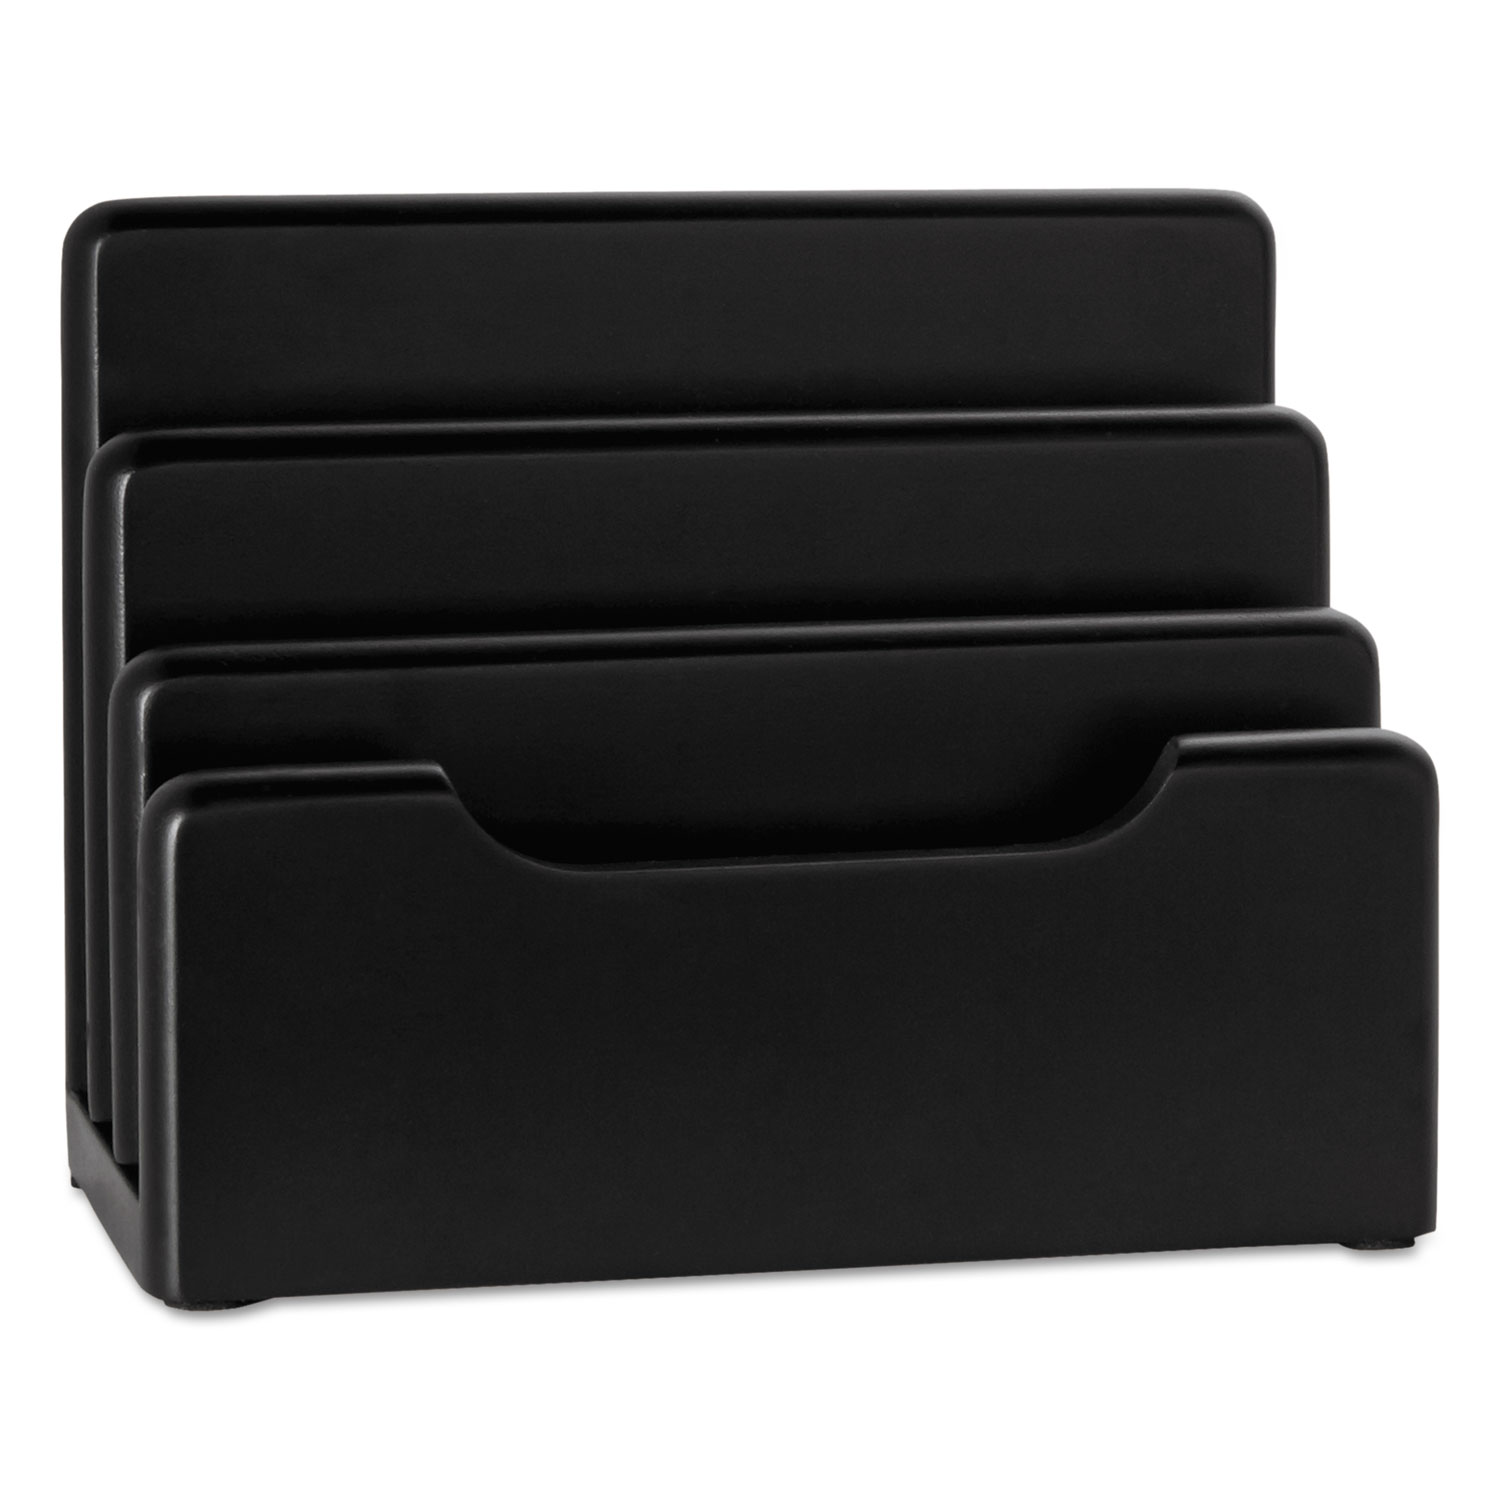  Rolodex 62525 Wood Tones Desktop Sorter, 3 Sections, Letter to Legal Size Files, 7.13 x 4 x 5.5, Black (ROL62525) 